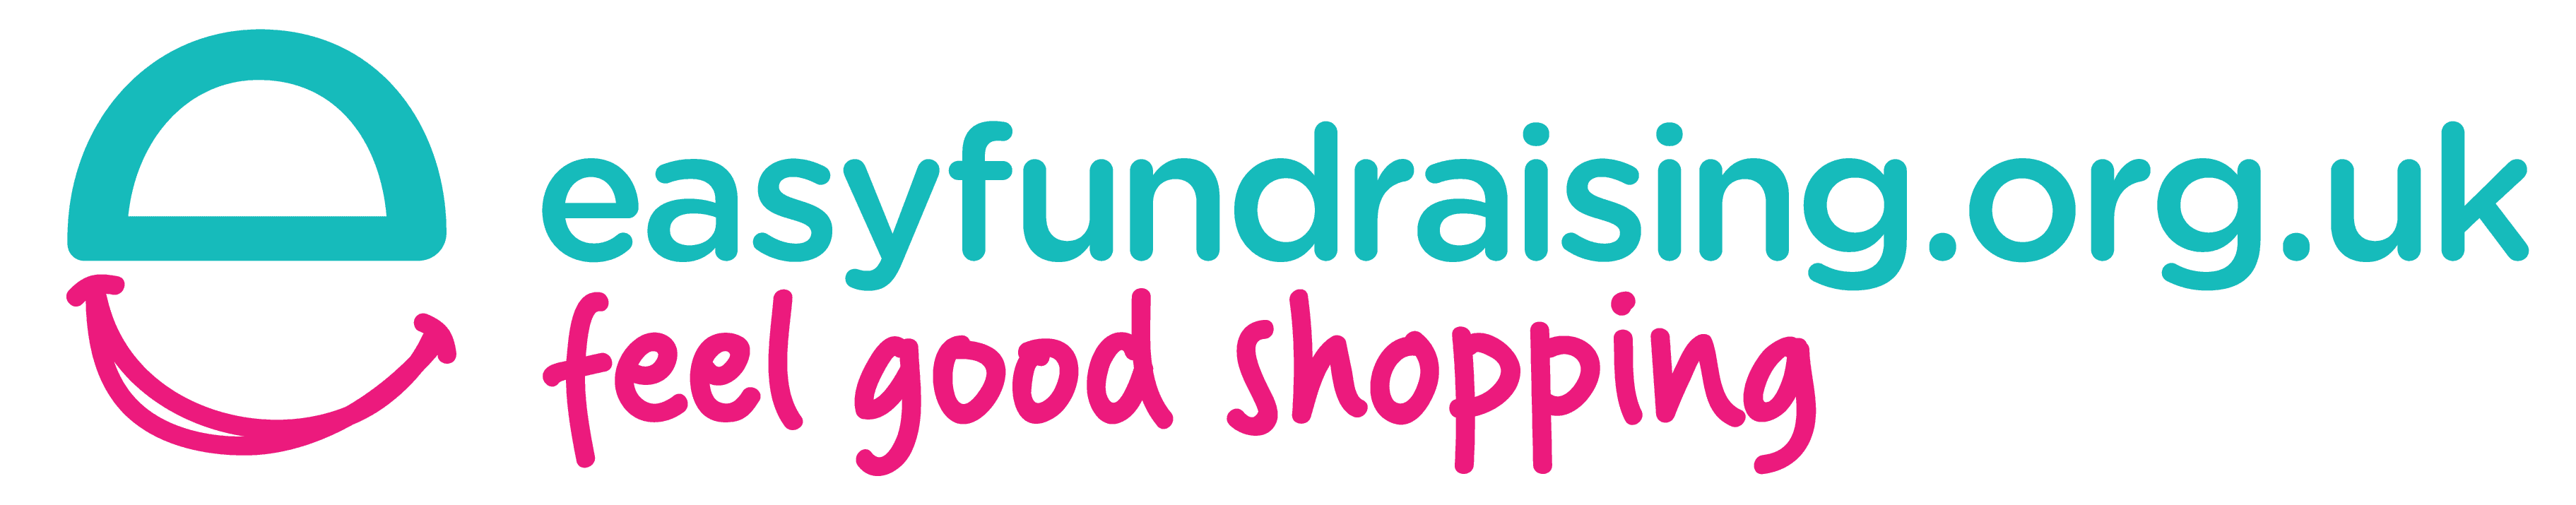 Doctors' Support Network 2016 easyfundraising logo mental health